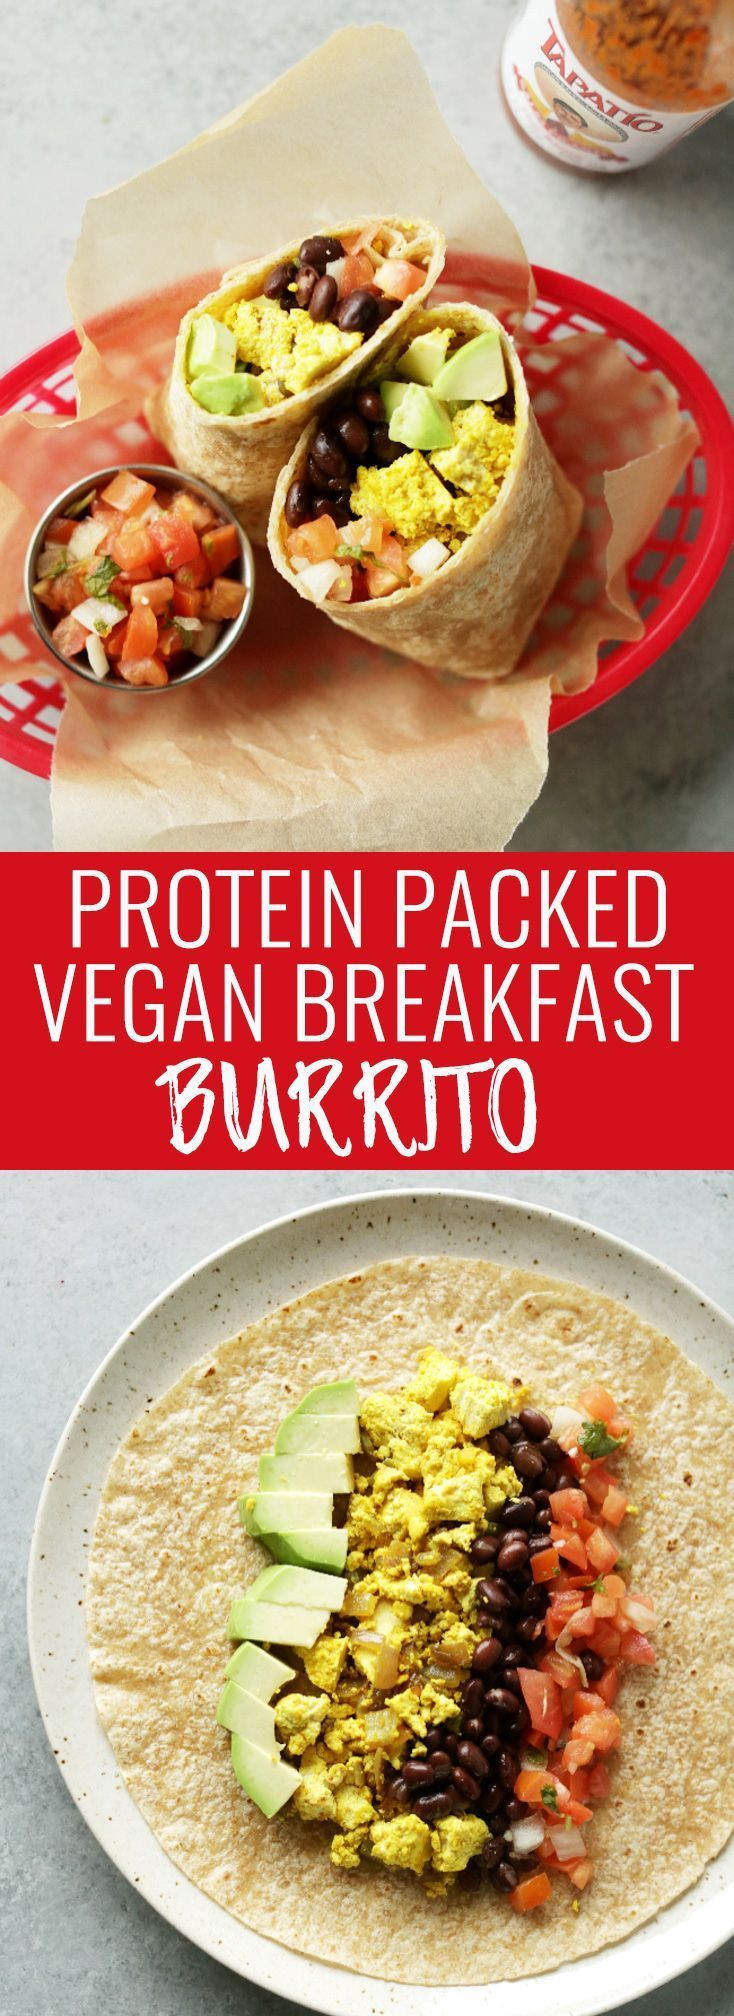 Healthy Protein Packed Breakfast
 Protein packed vegan breakfast burrito Recipe